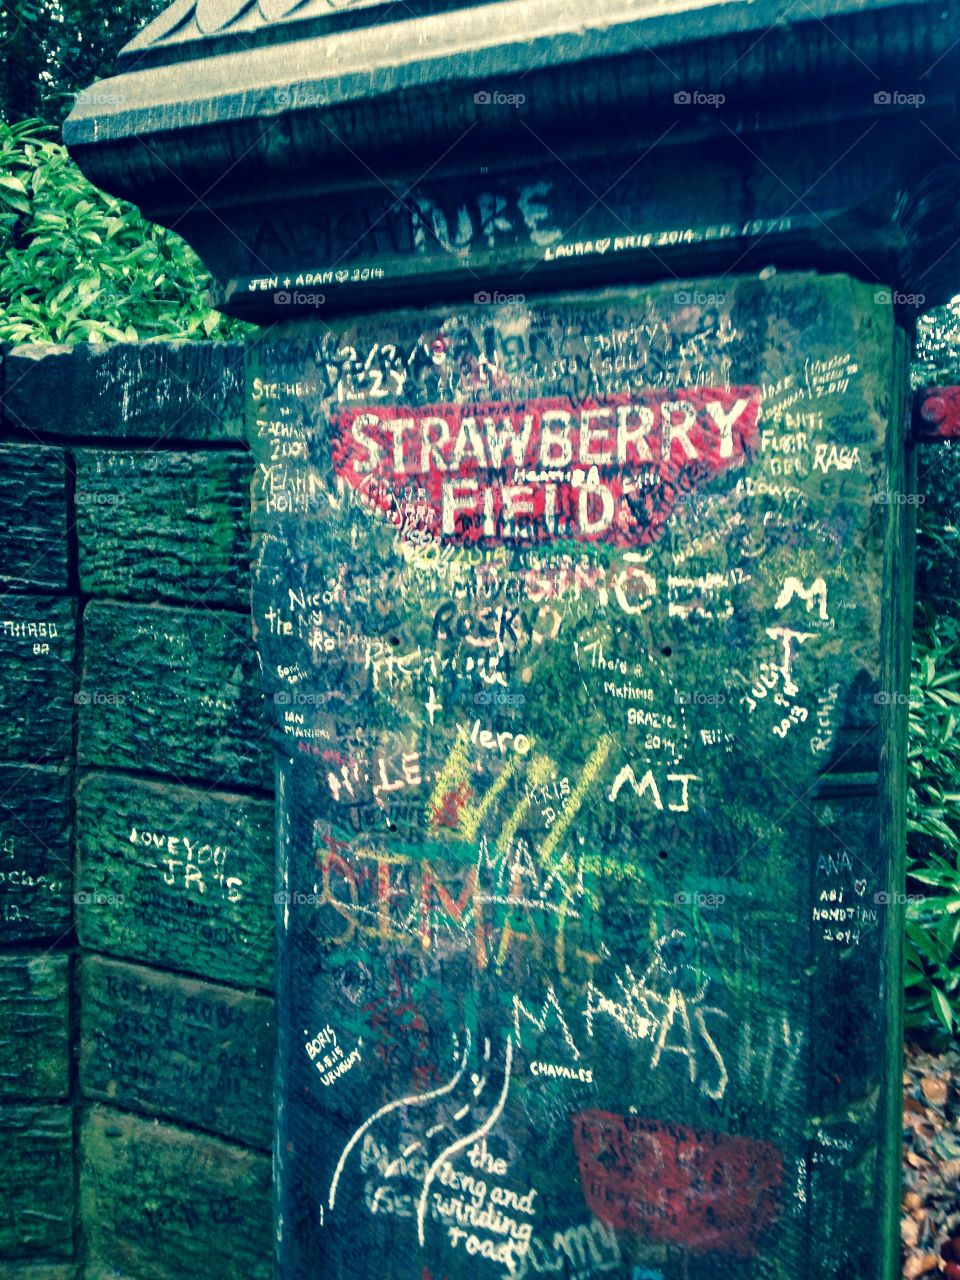 Strawberry fields forever - Beatles 